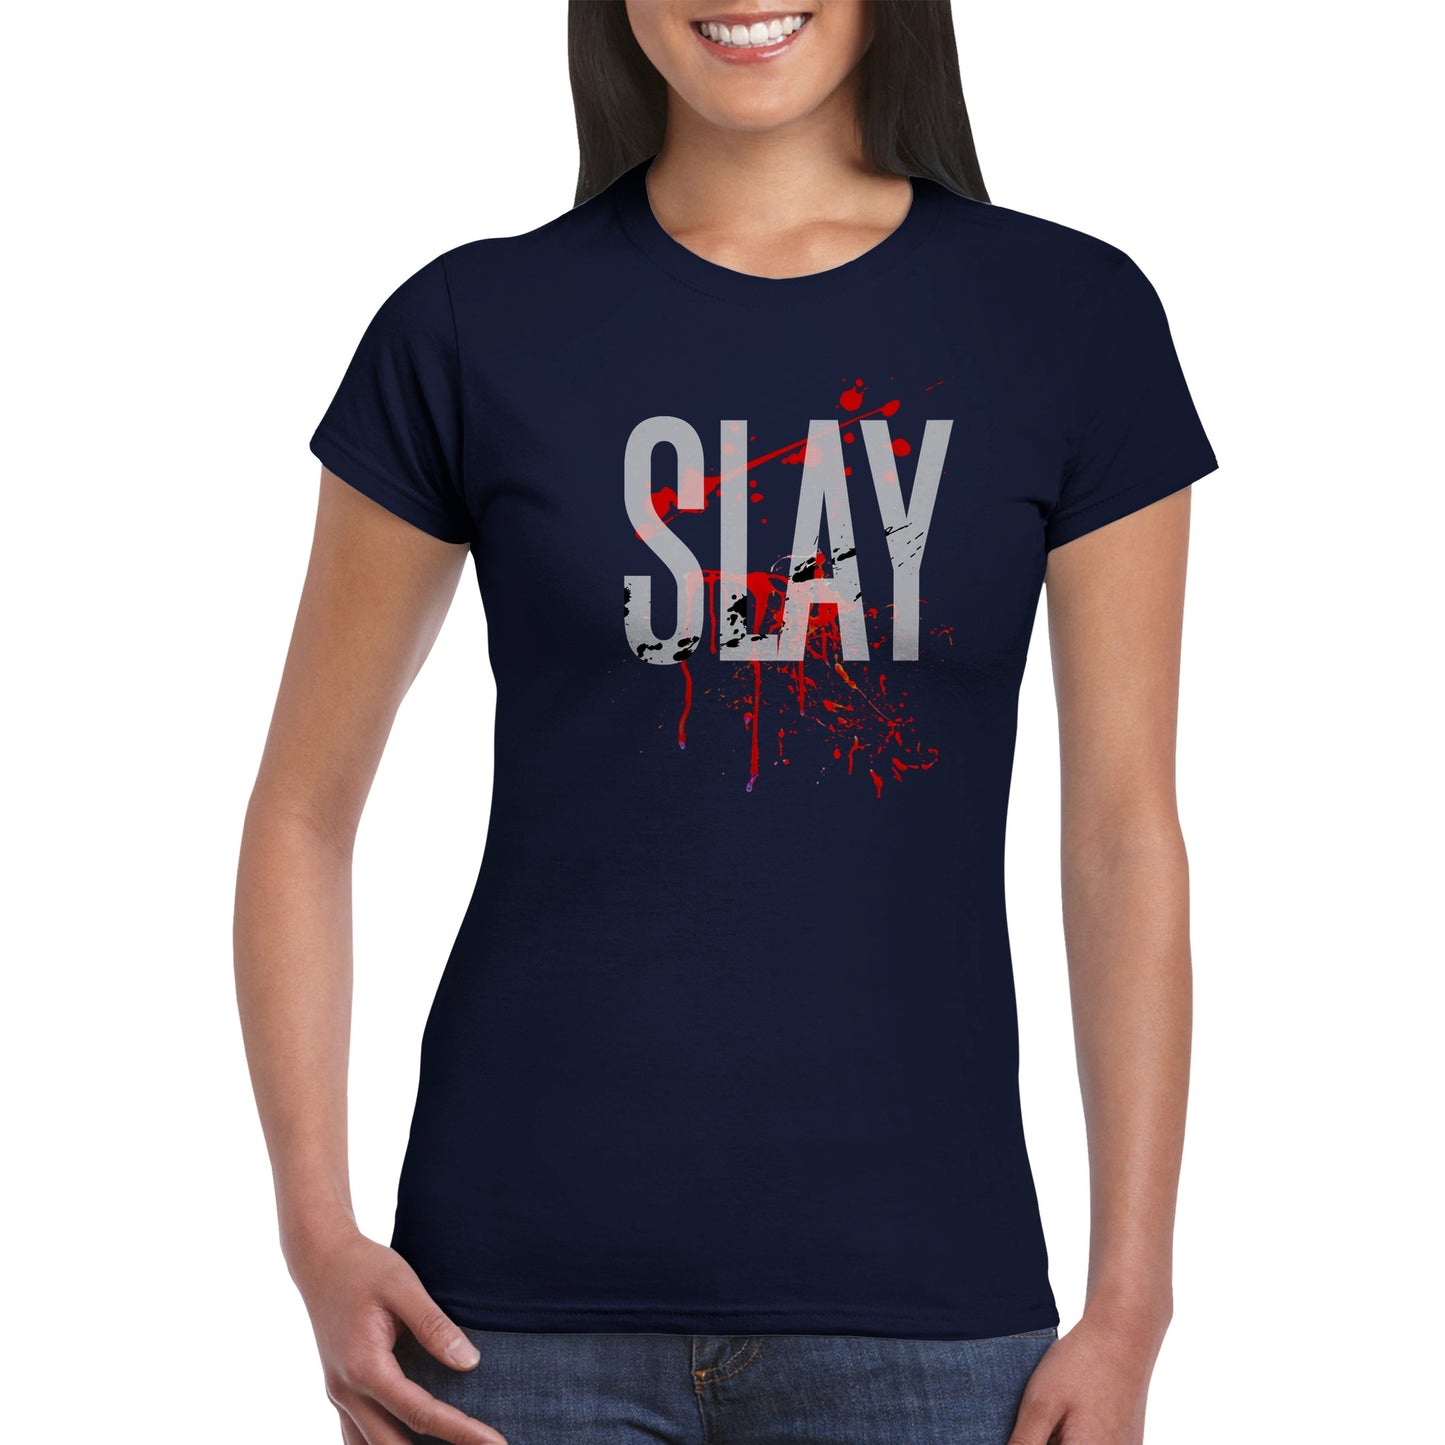 Slay bloodsplatter- Classic Womens Crewneck T-shirt